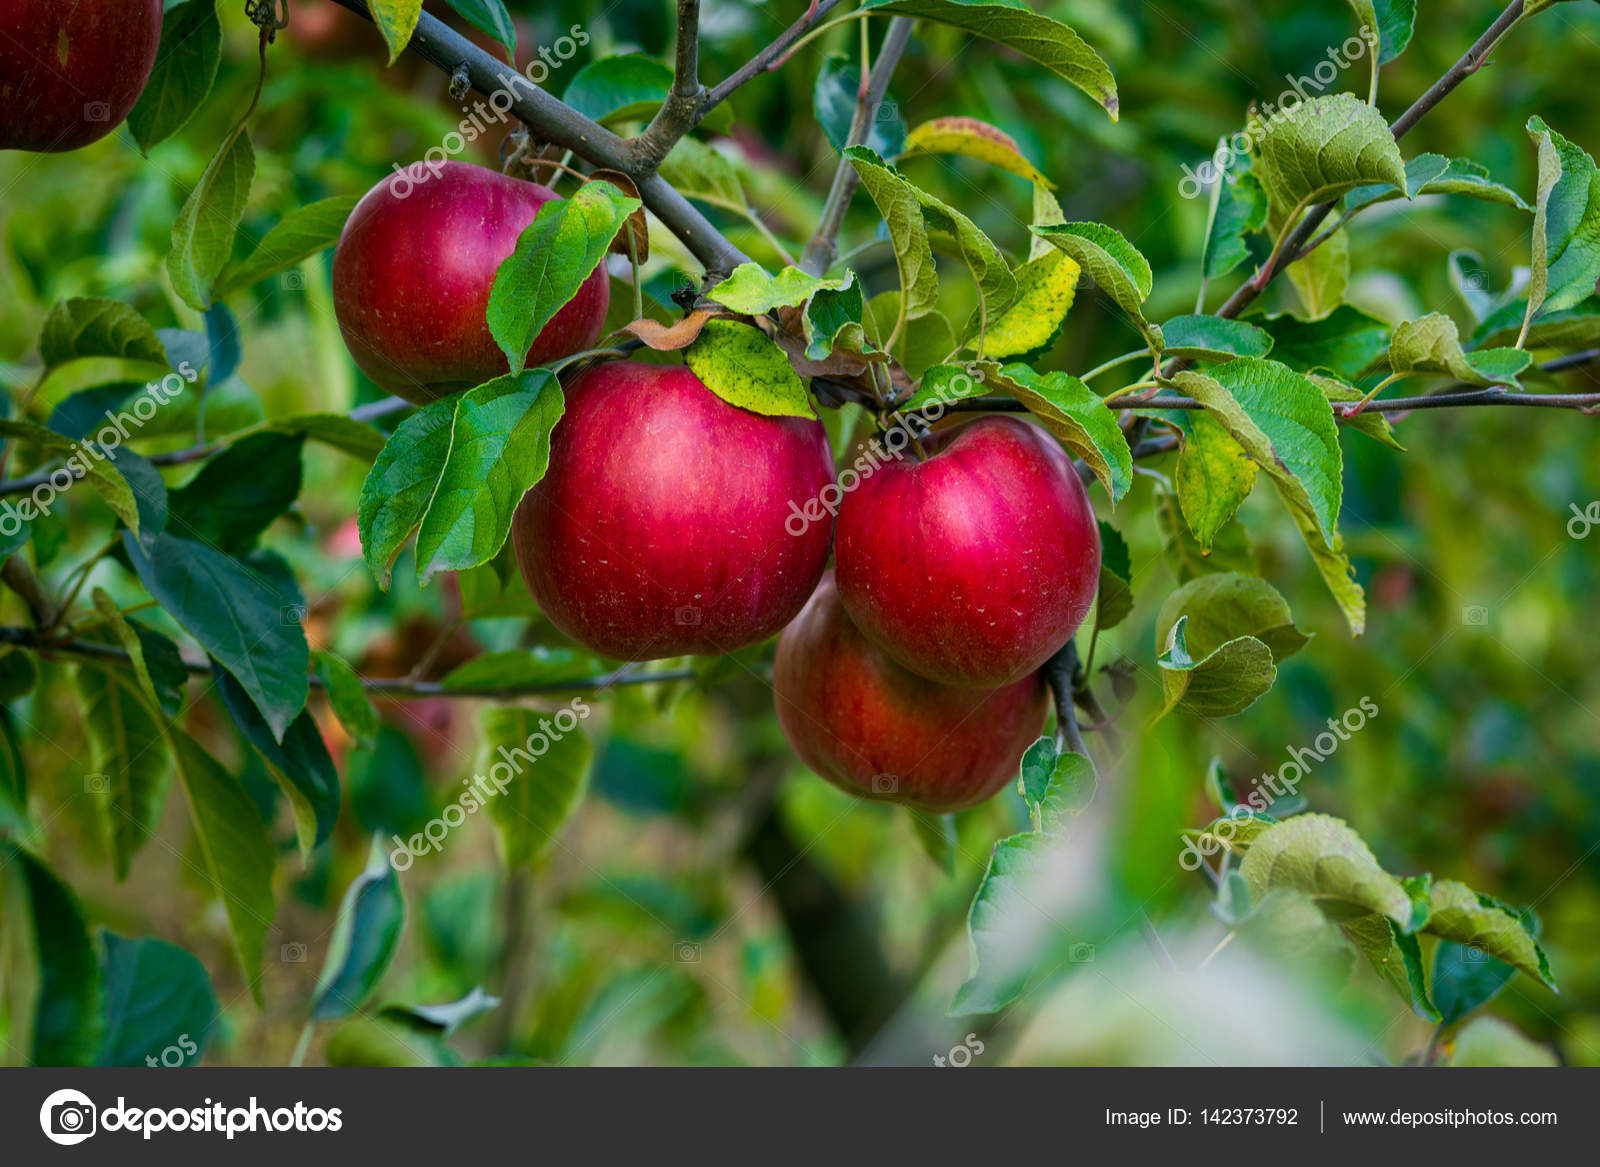 https://st3.depositphotos.com/8000700/14237/i/1600/depositphotos_142373792-stock-photo-fresh-organic-applesapple-orchardapple-garden.jpg